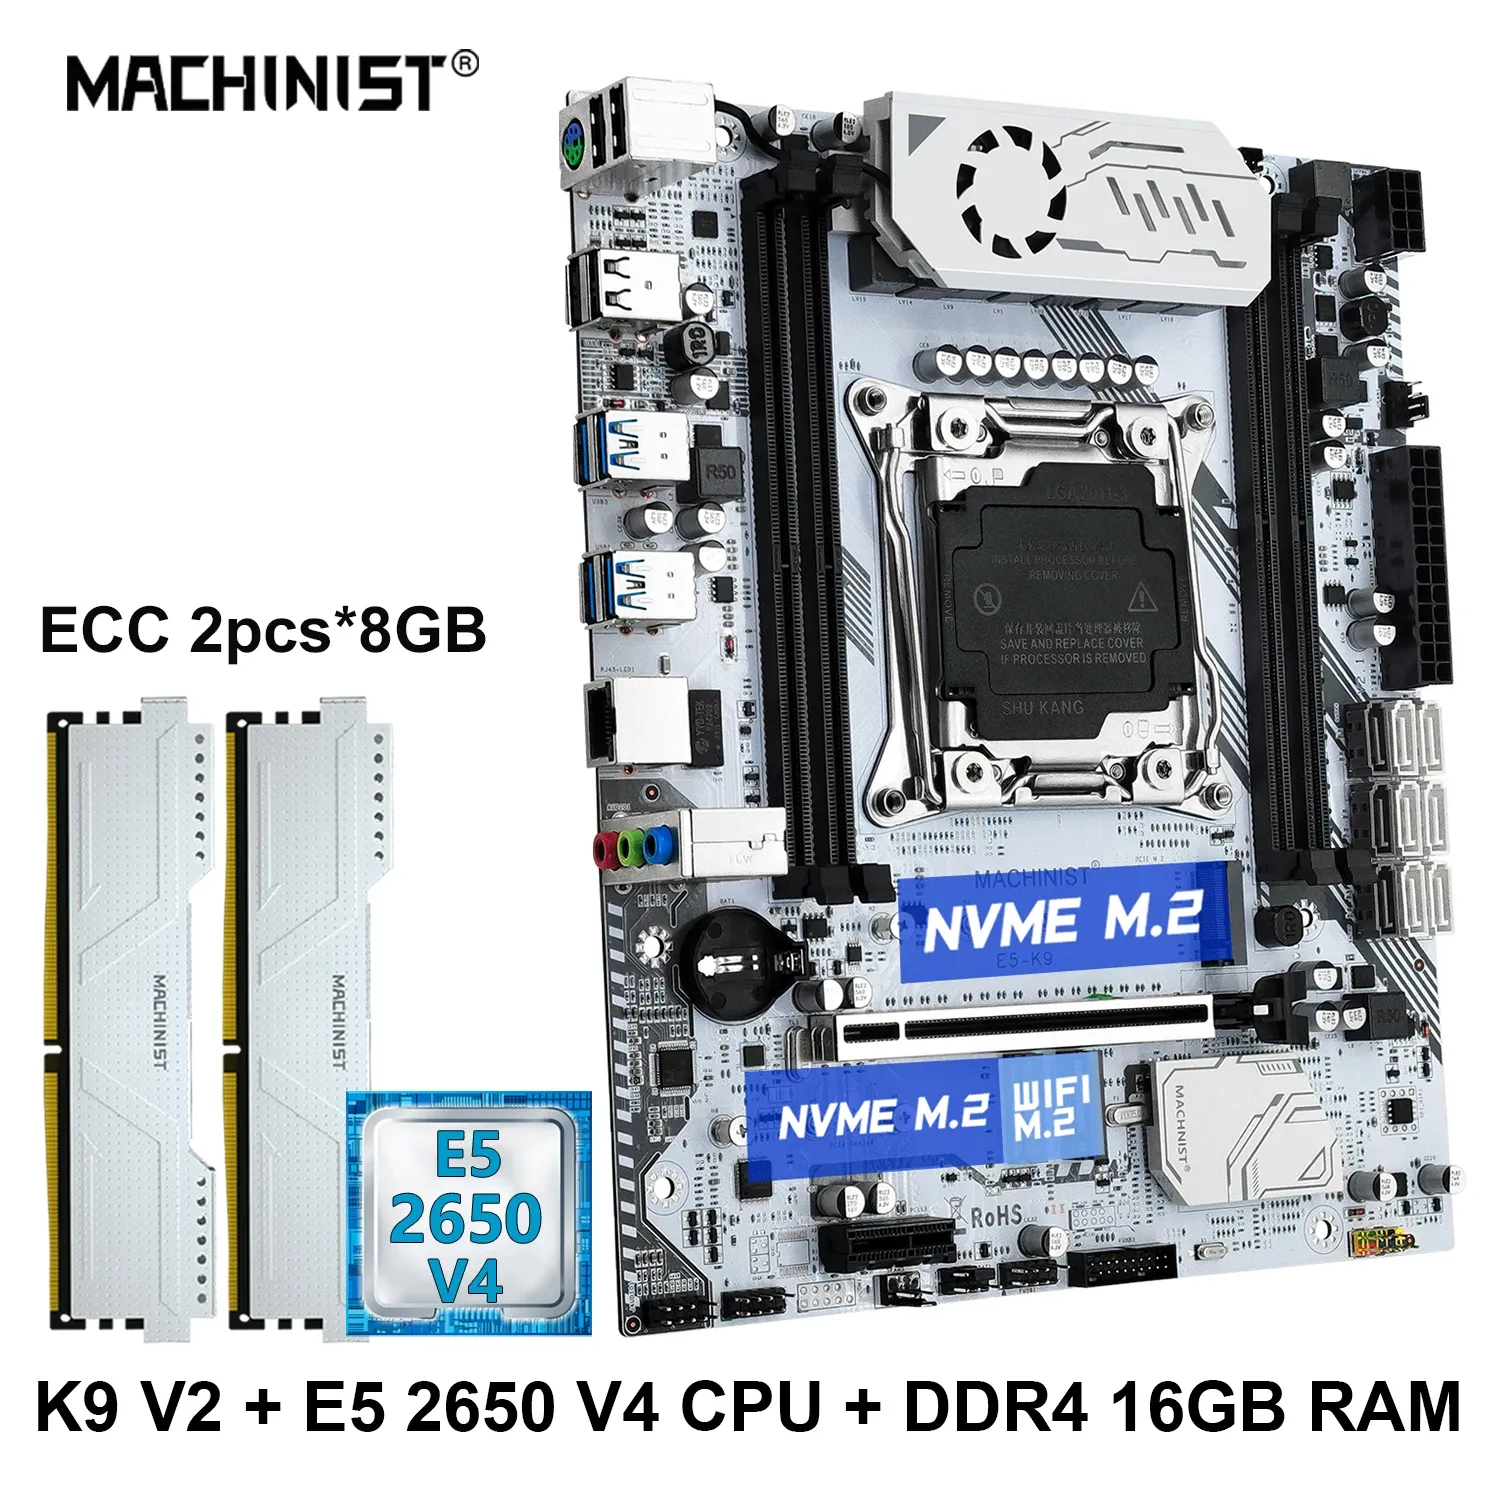 Motherboards MACHINIS X99 Motherboard Set LGA 20113 Kit Xeon E5 2650 V4 CPU Processor DDR4 8GB*2 RAM Memory MATX M.2 NVME SSD pcie3.0 k9 V2